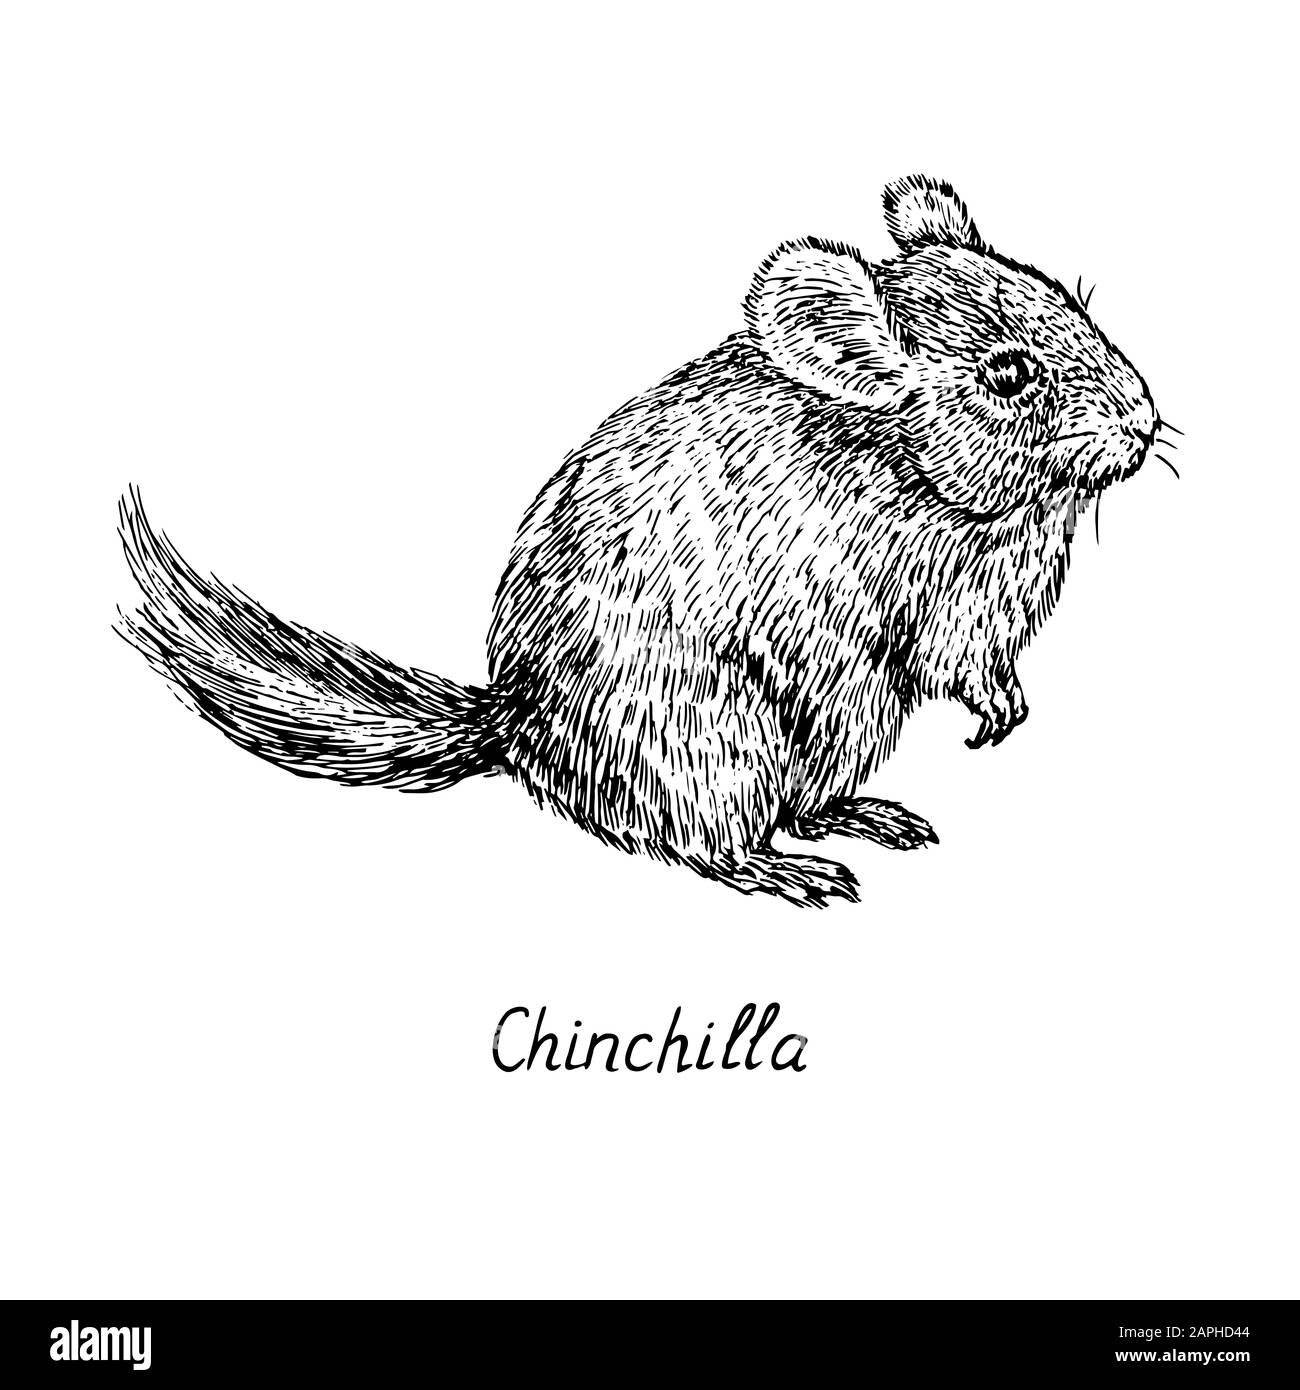 how to draw chinchilla - YouTube